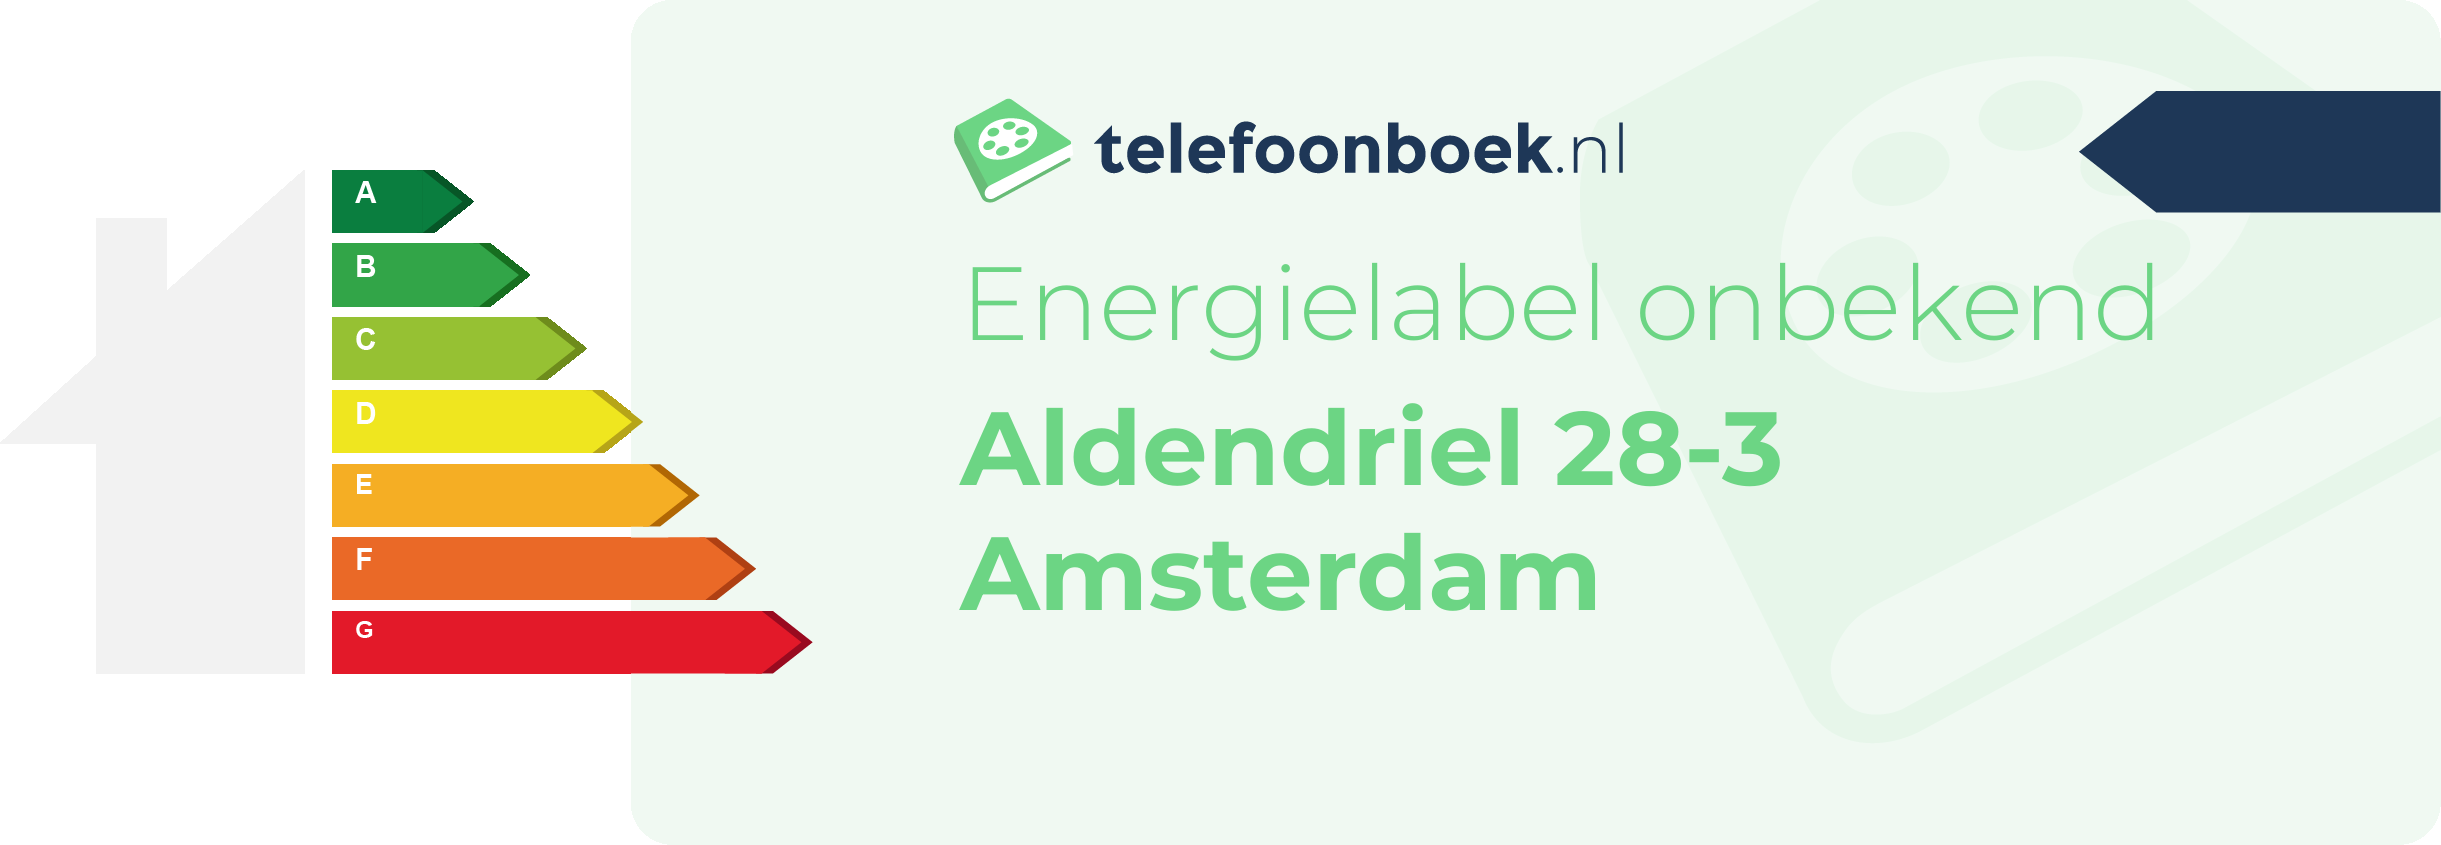 Energielabel Aldendriel 28-3 Amsterdam